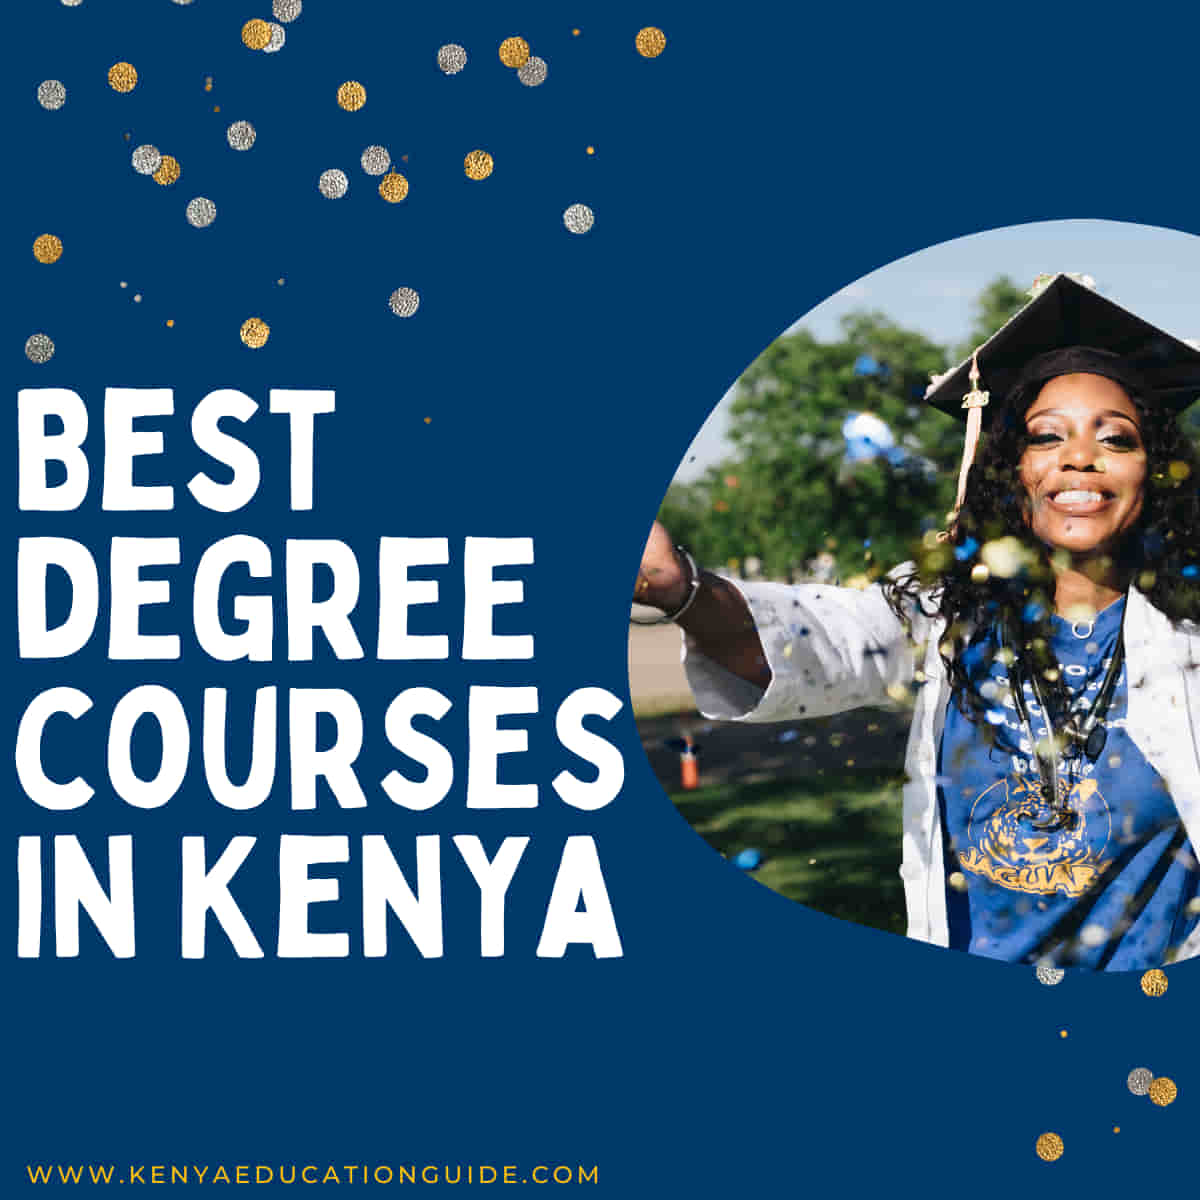 Best degree courses in Kenya